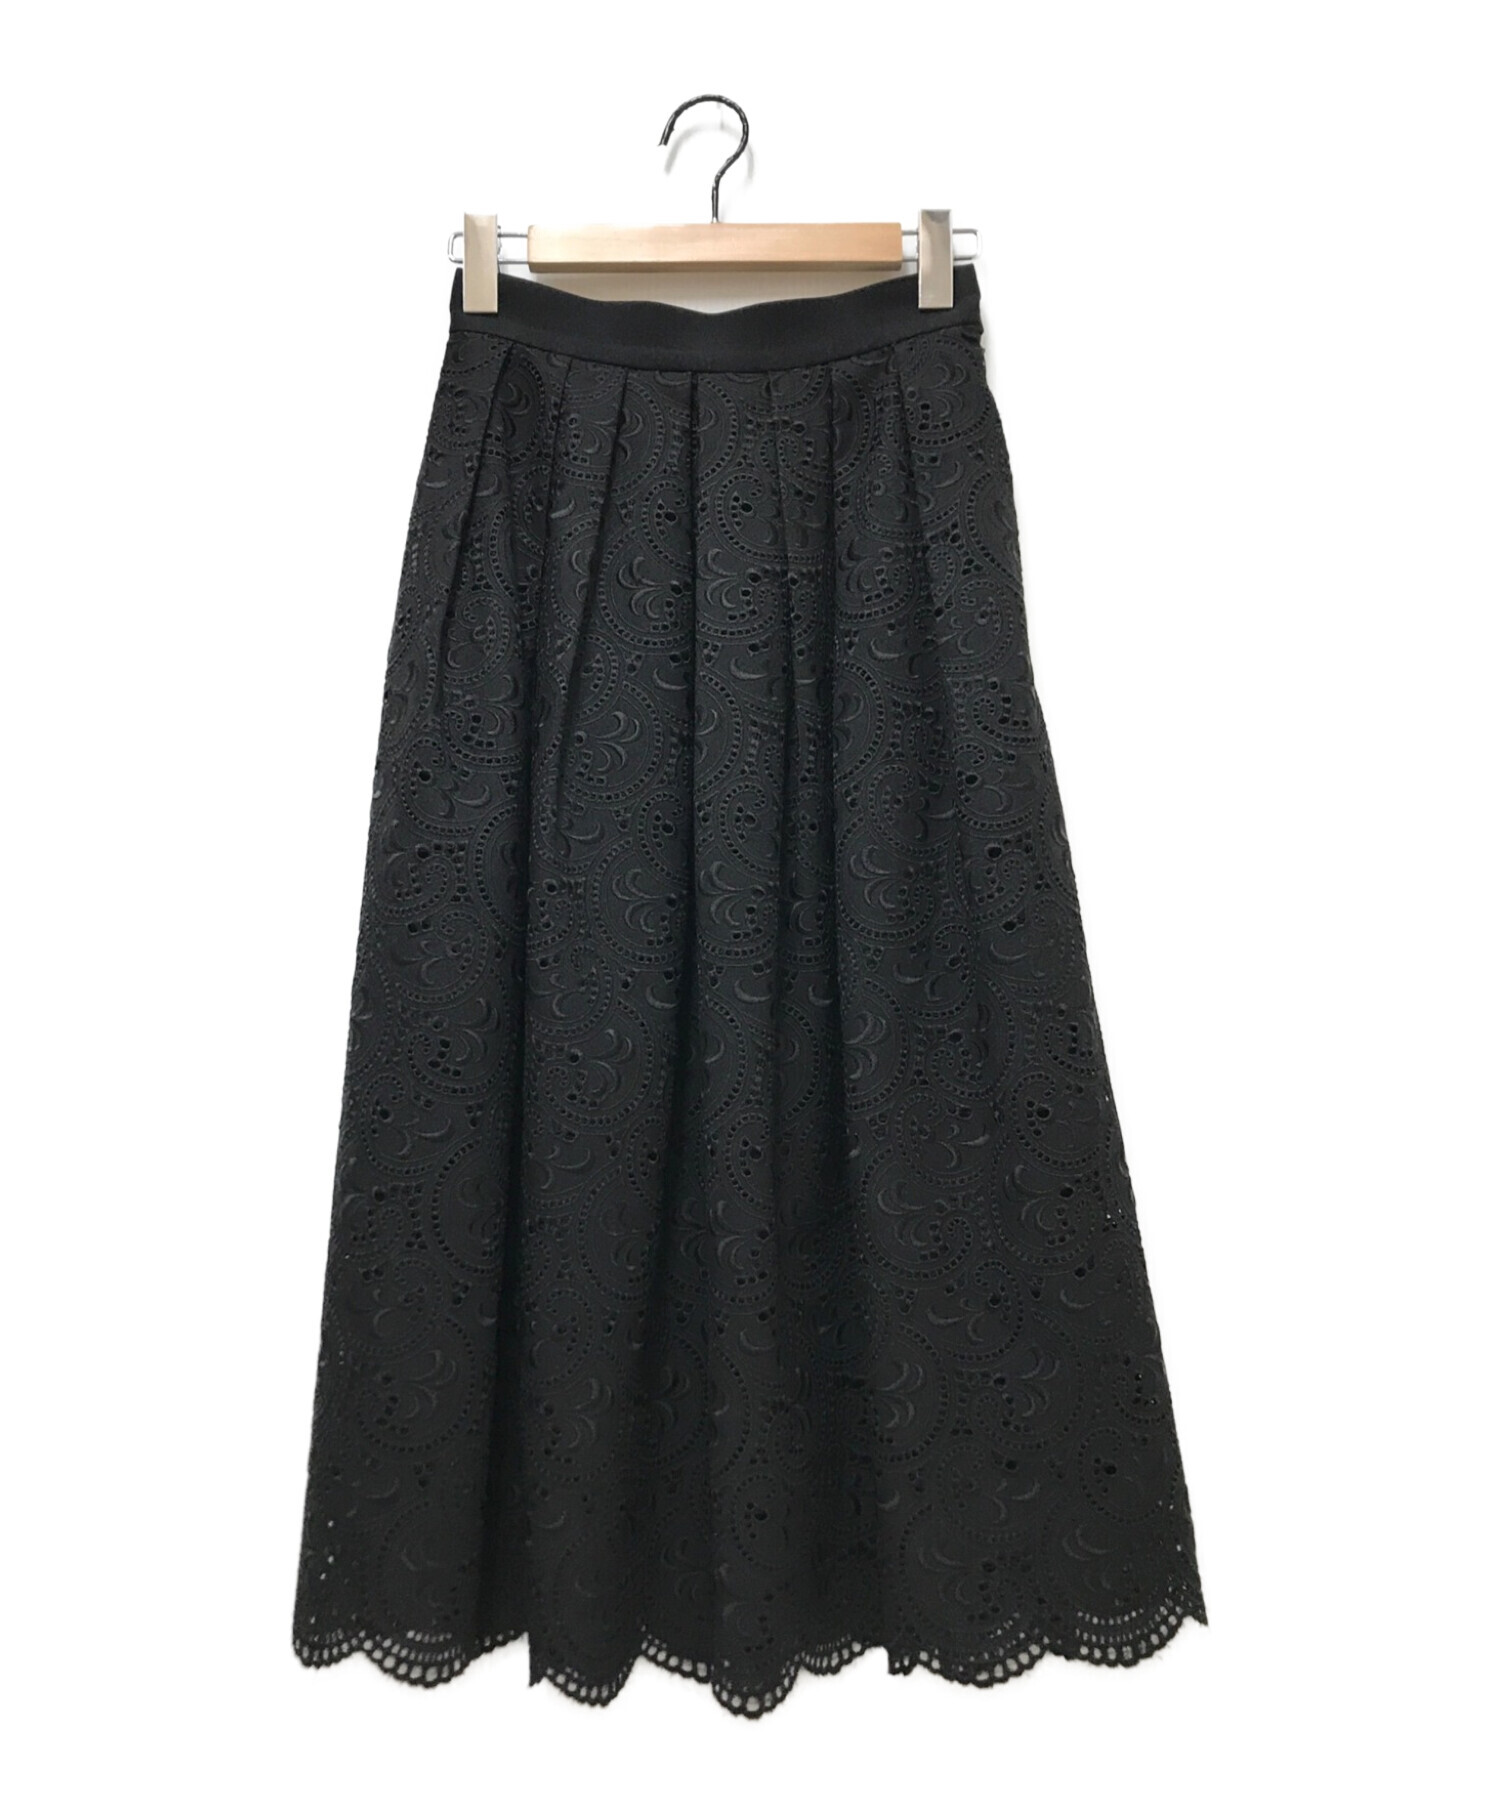 SHE TOKYO (シートーキョー) 刺繍スカート ブラック サイズ:36